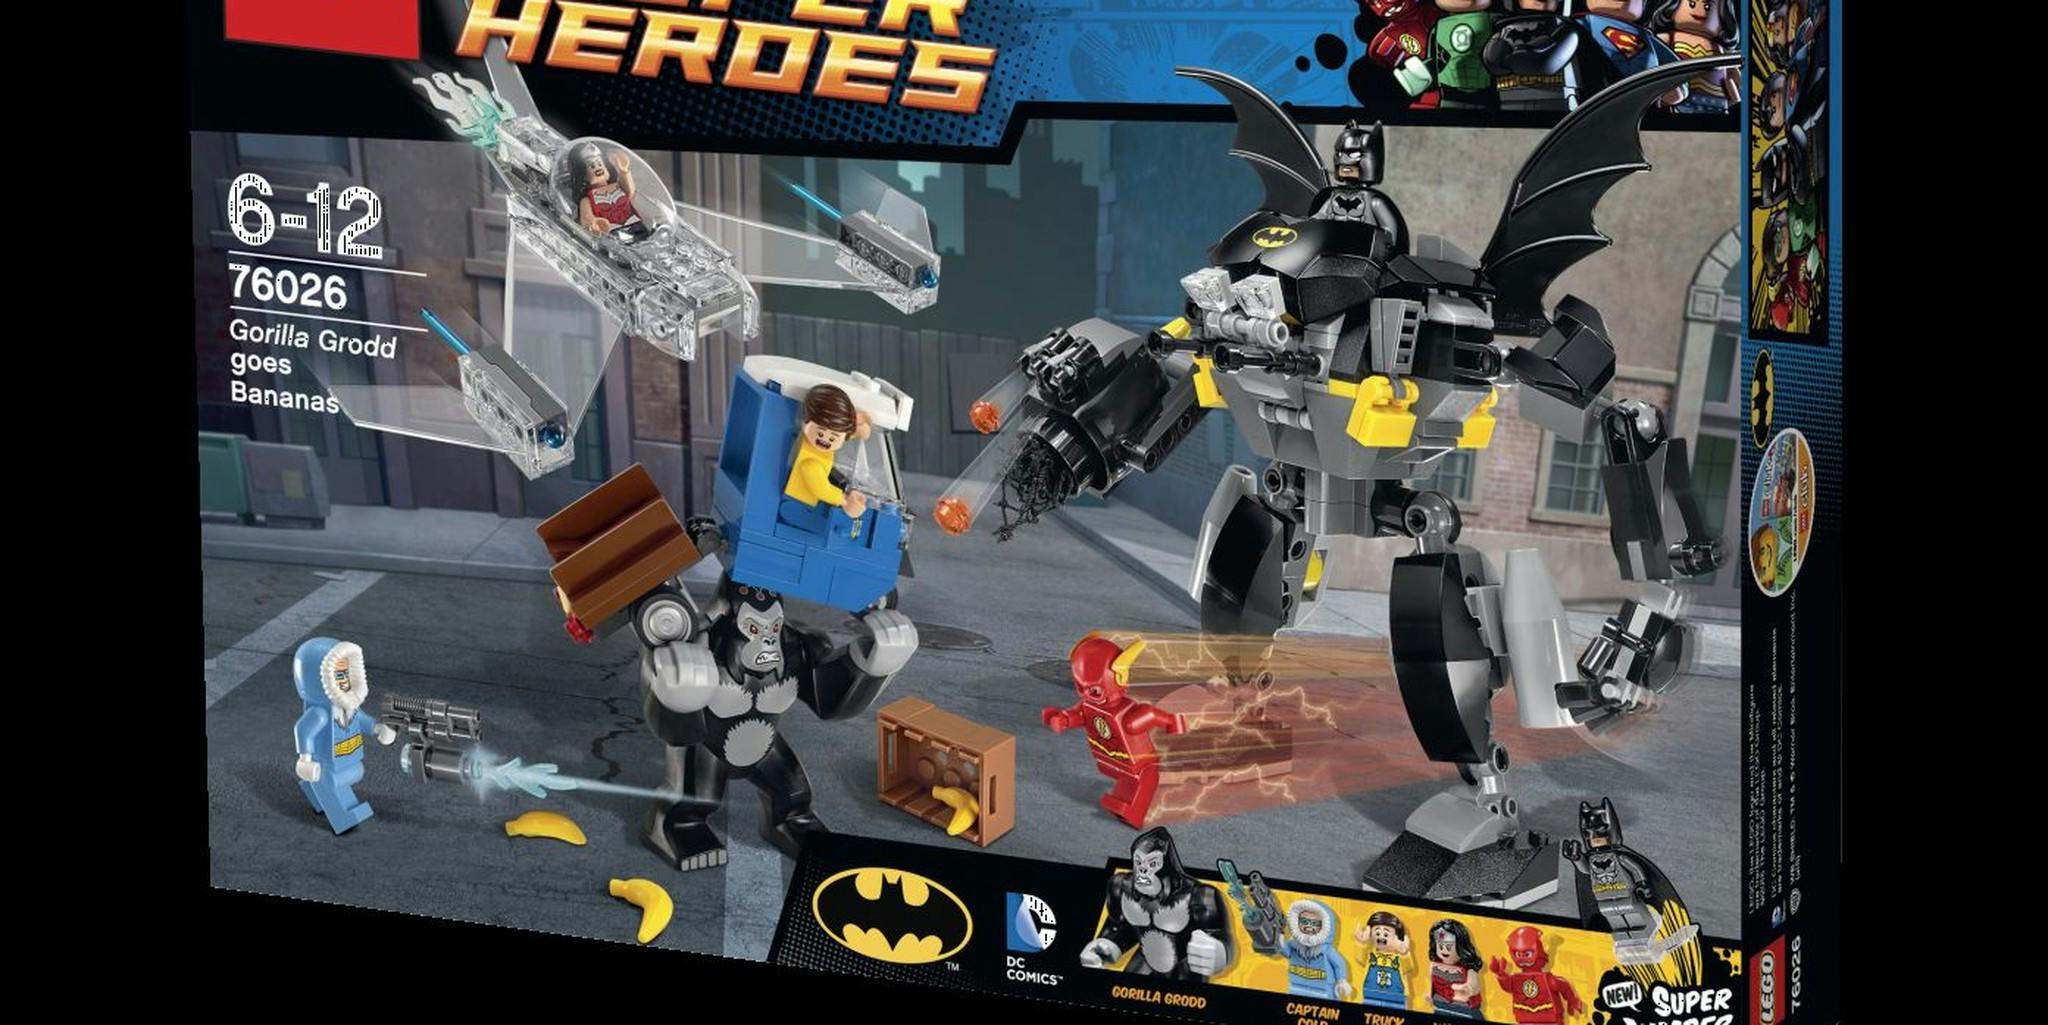 Incorrecto cazar Remisión A new Lego set features Wonder Woman's invisible jet - The Daily Dot